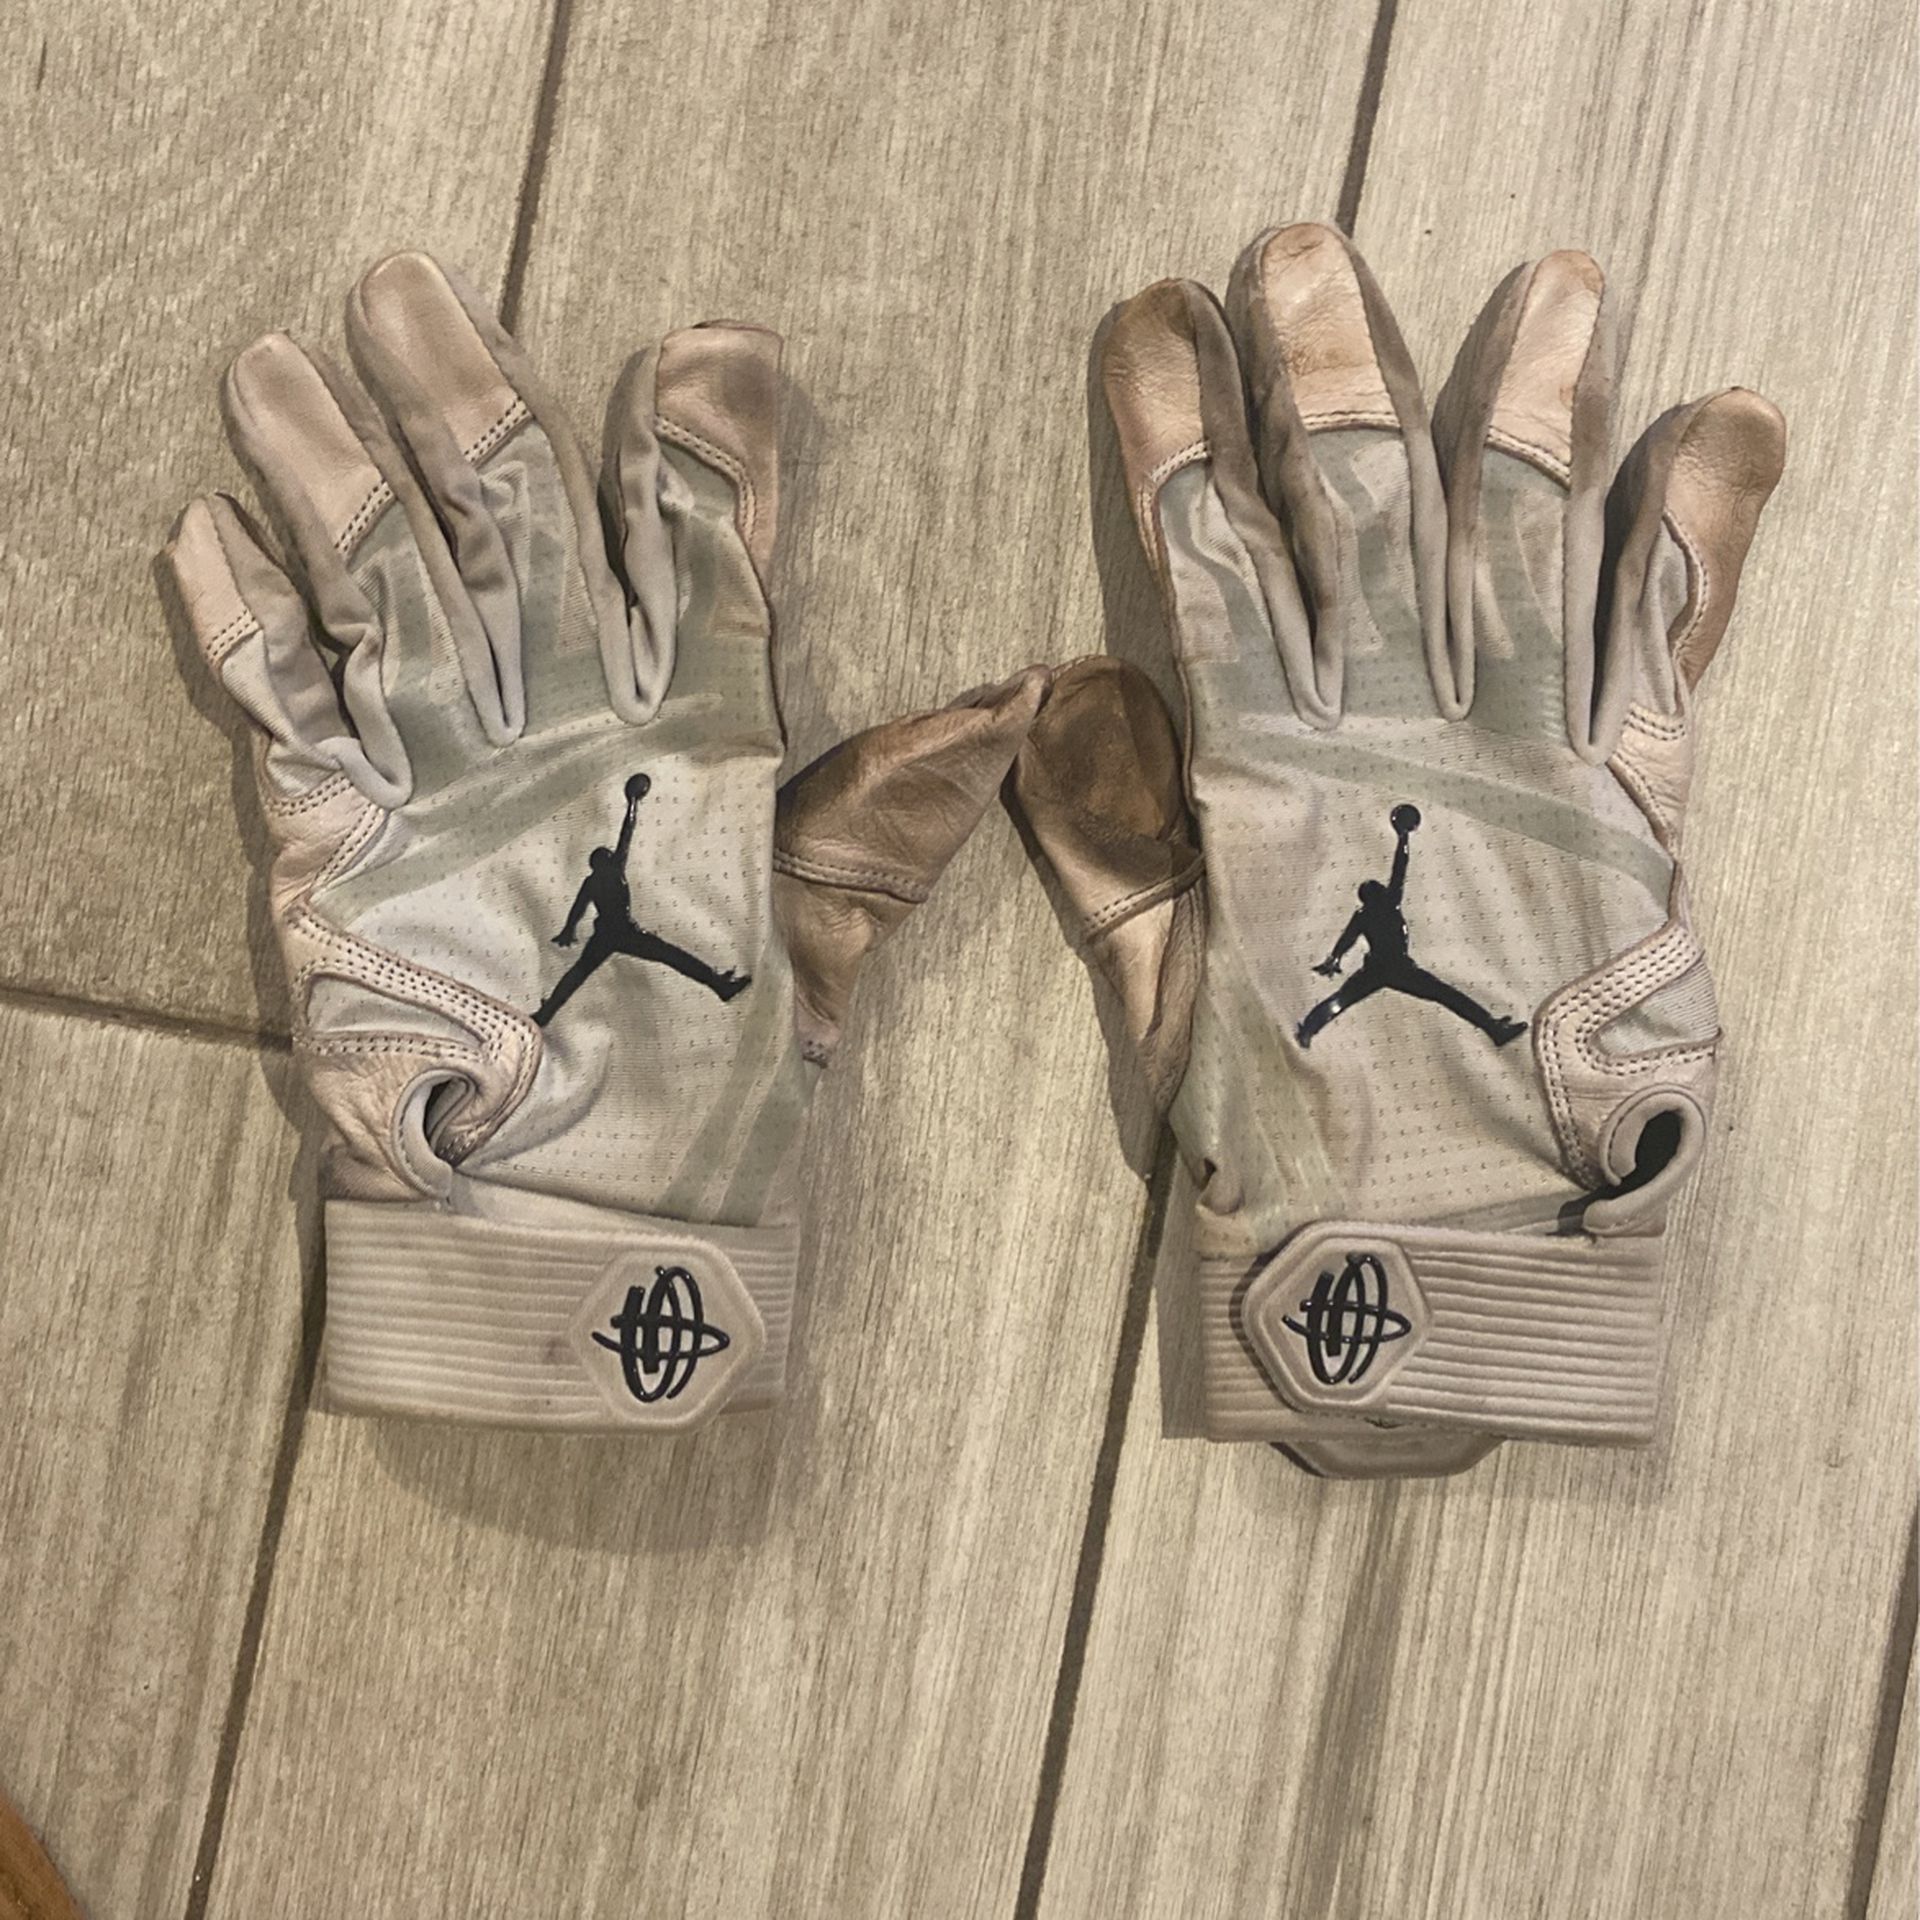 Aaron Hicks P.E Jordan batting Gloves for Sale in Riverside, CA